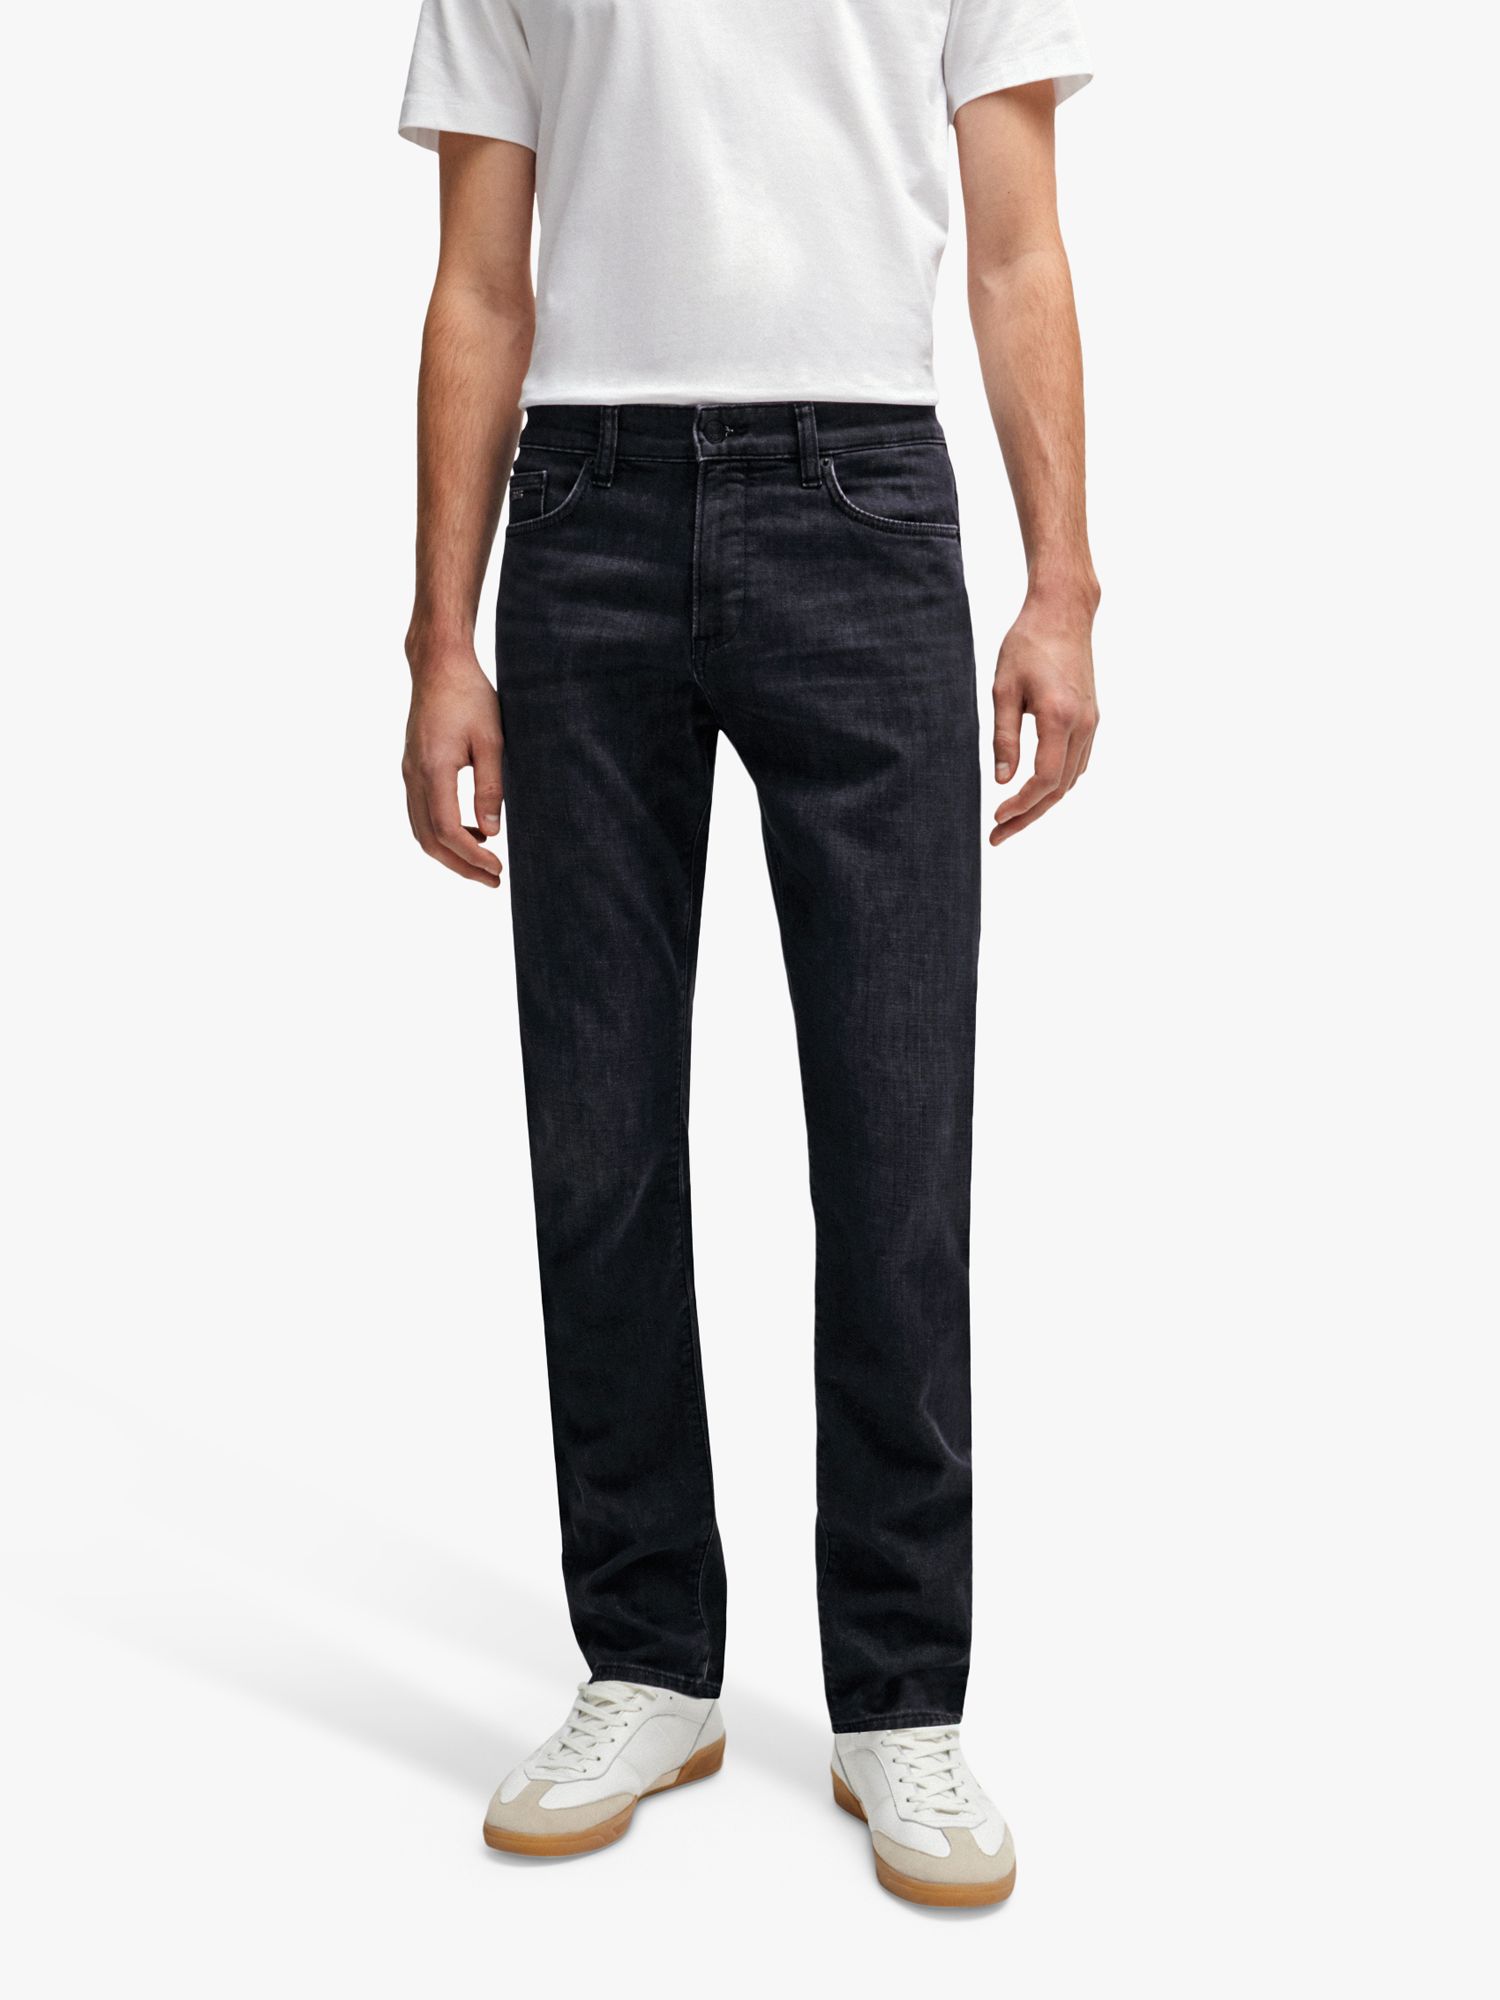 BOSS Delware Denim Jeans, Charcoal, 38R